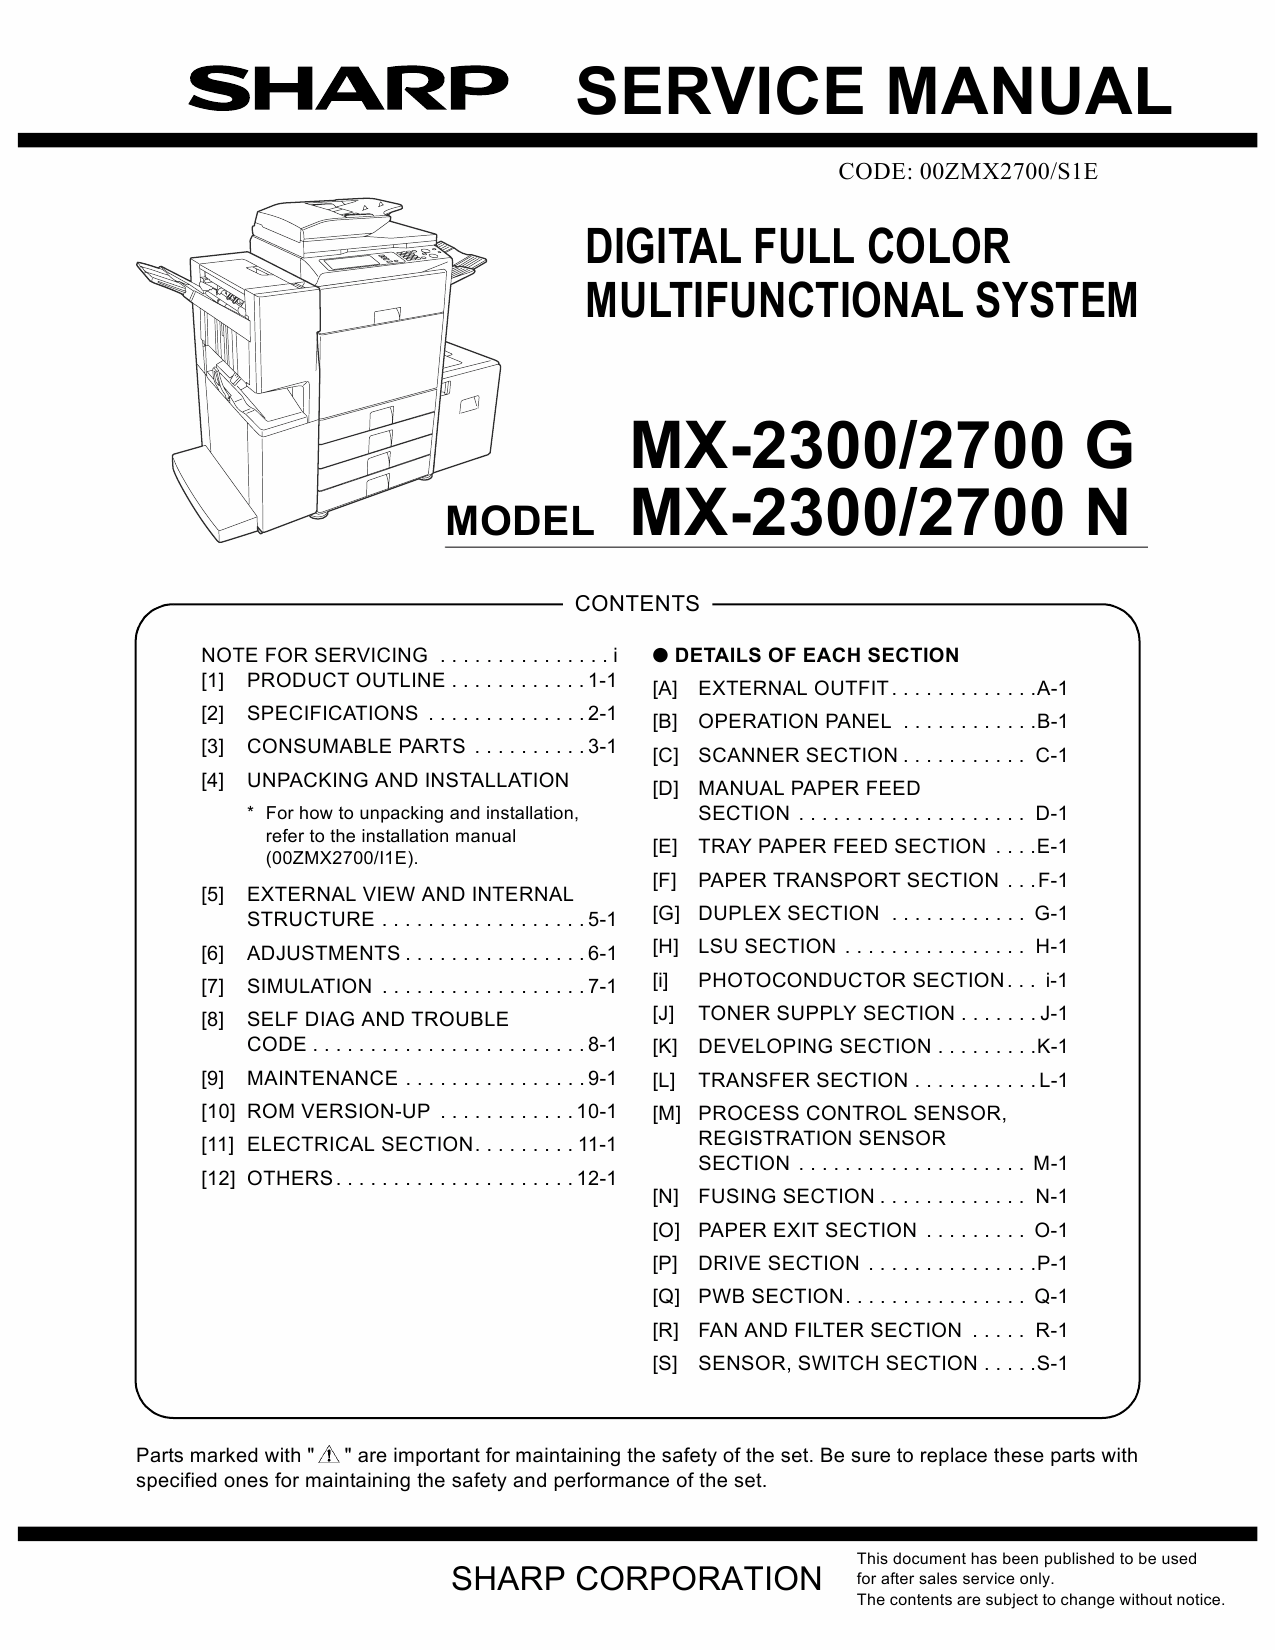 SHARP MX 2300 2700 N G Service Manual-1